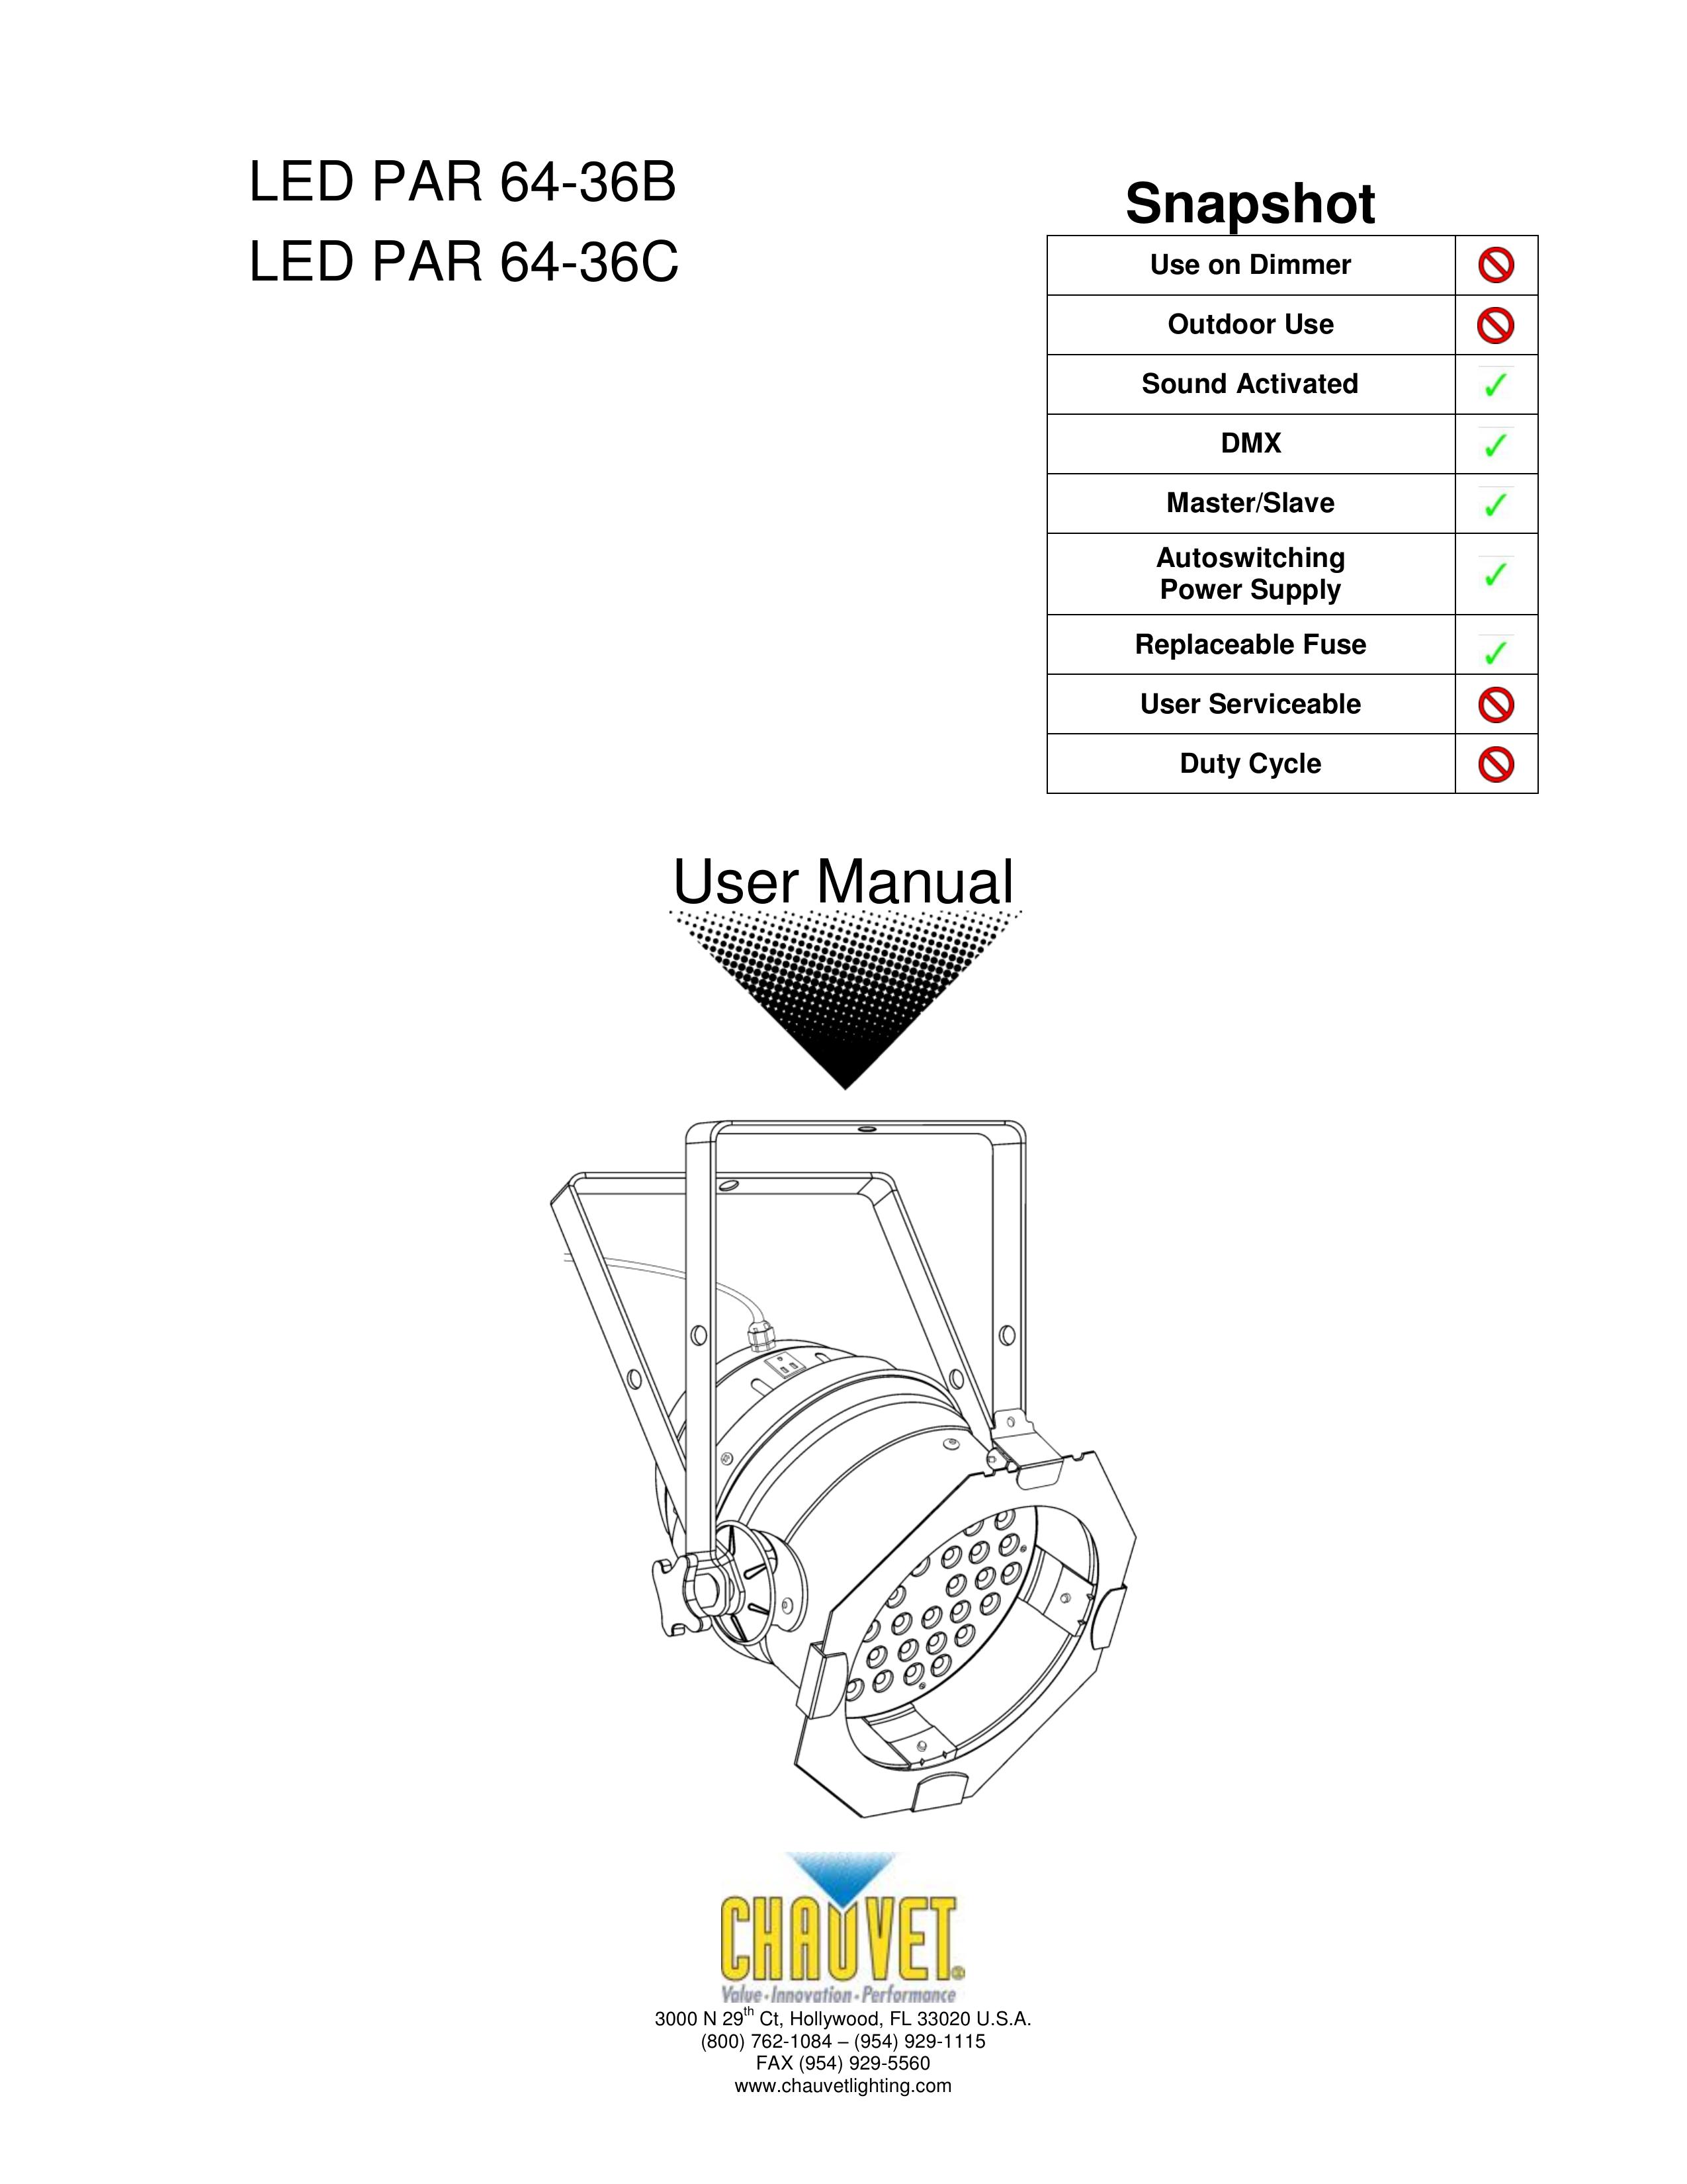 Chauvet LED PAR 64-36C Camera Accessories User Manual